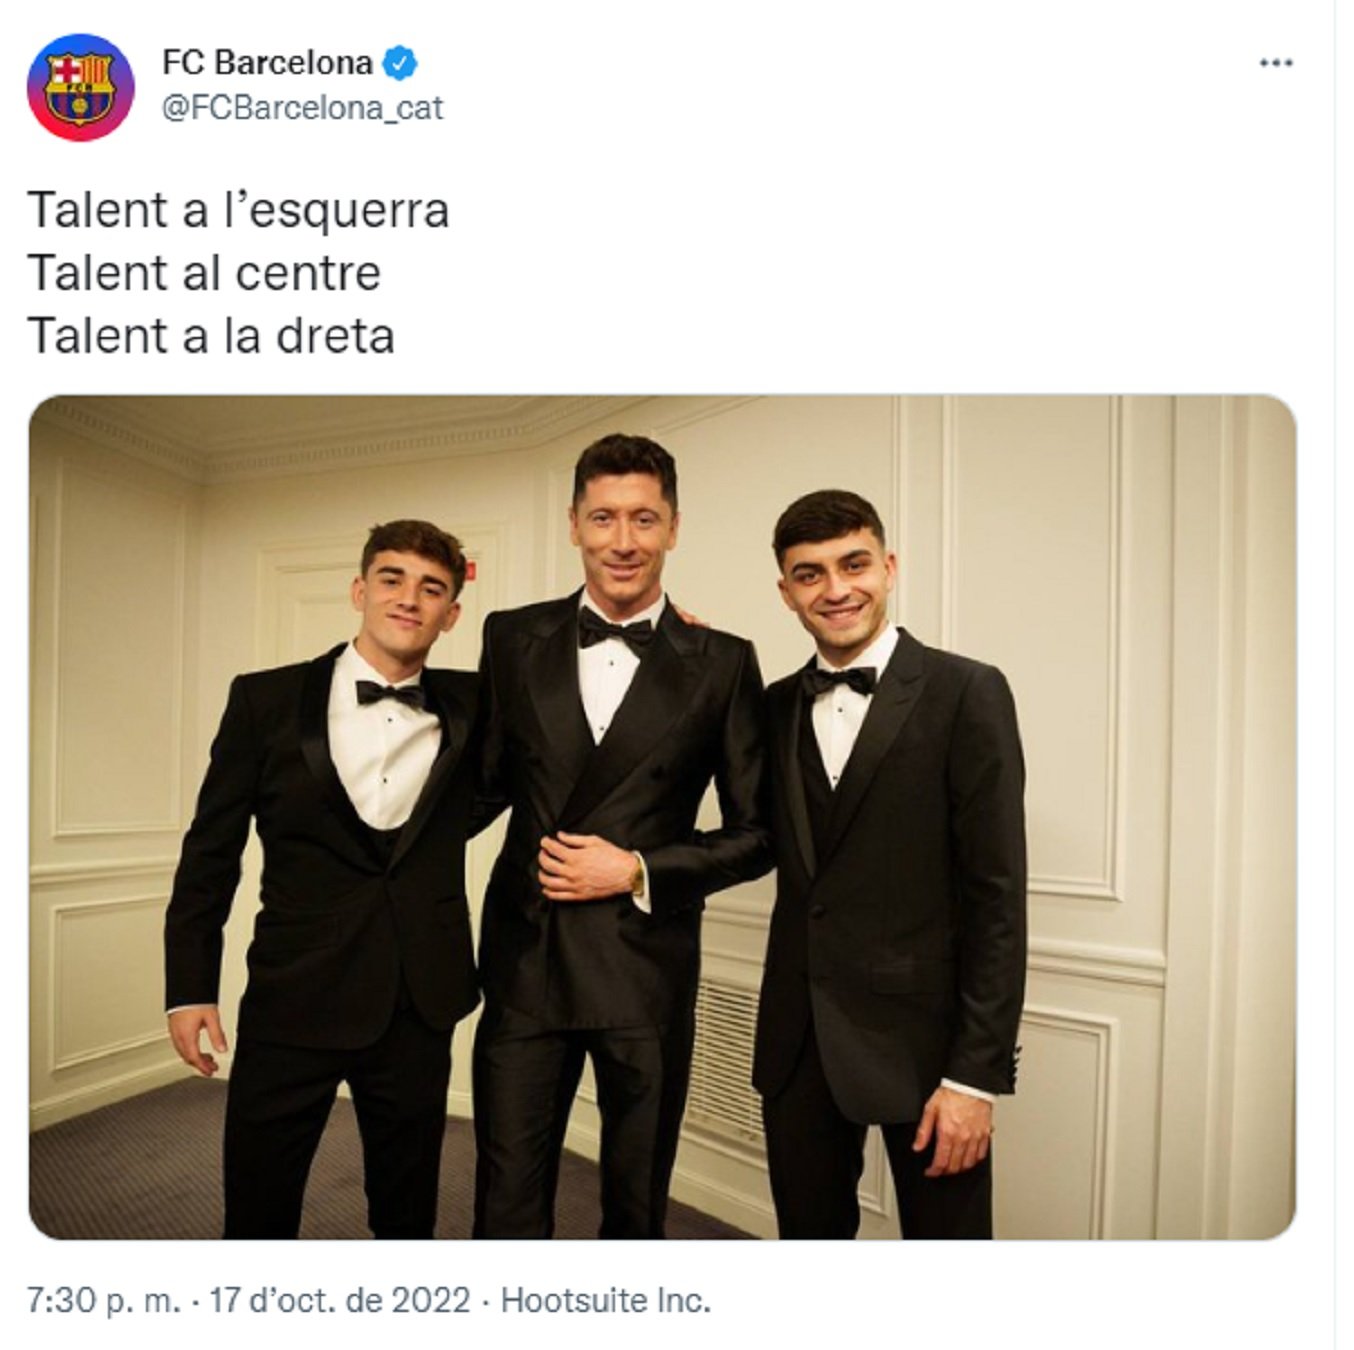 FC Barcelona Twitter